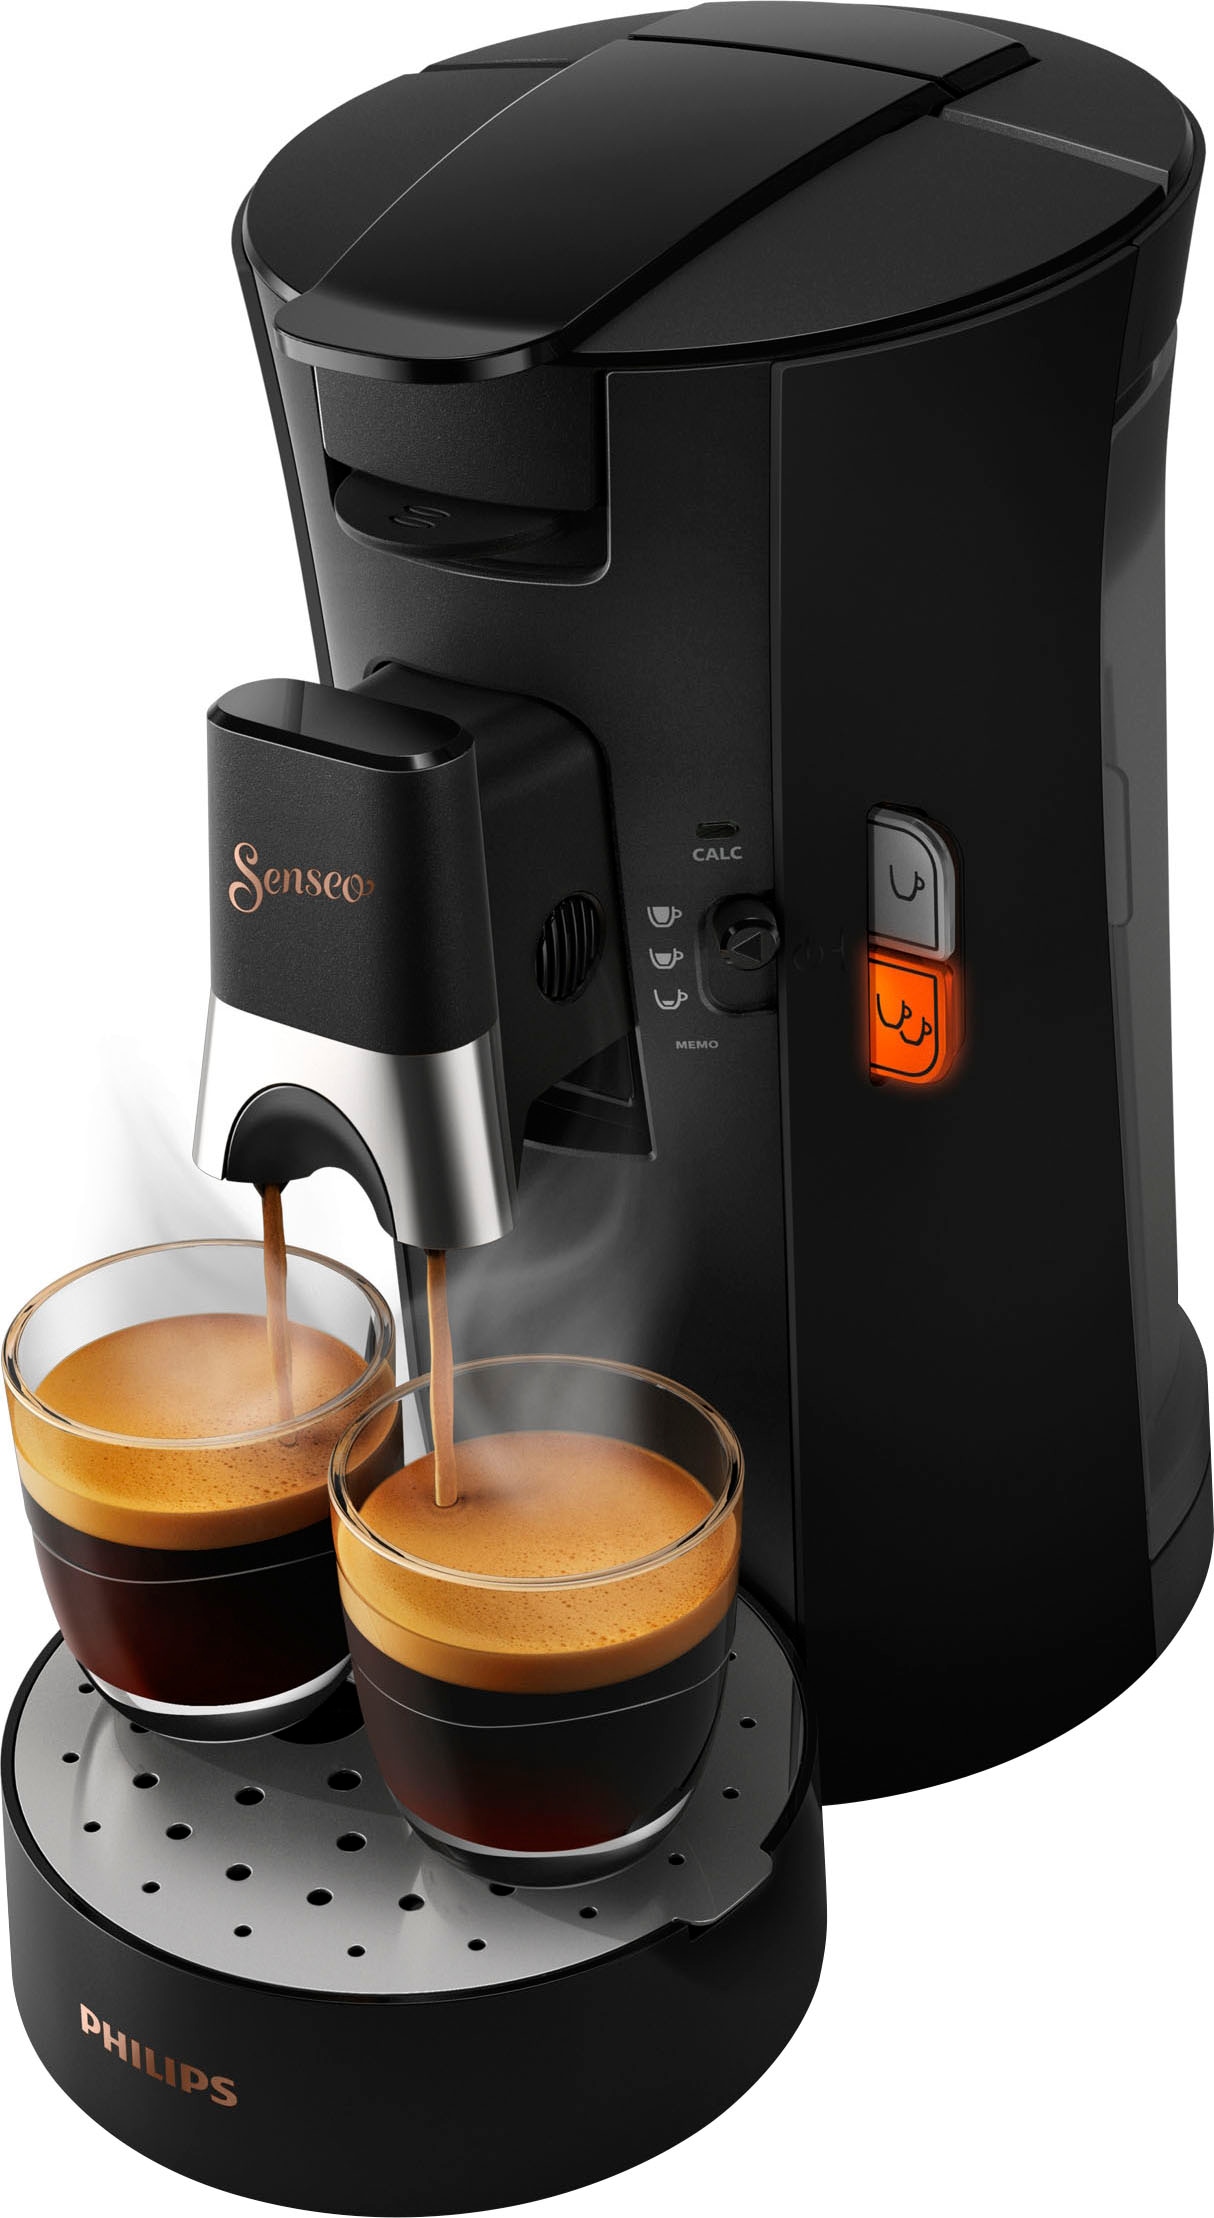 Philips Senseo Kaffeepadmaschine »Select Memo-Funktion bei CSA240/60«, 3 online aus recyceltem Plastik, Kaffeespezialitäten, 21% mit